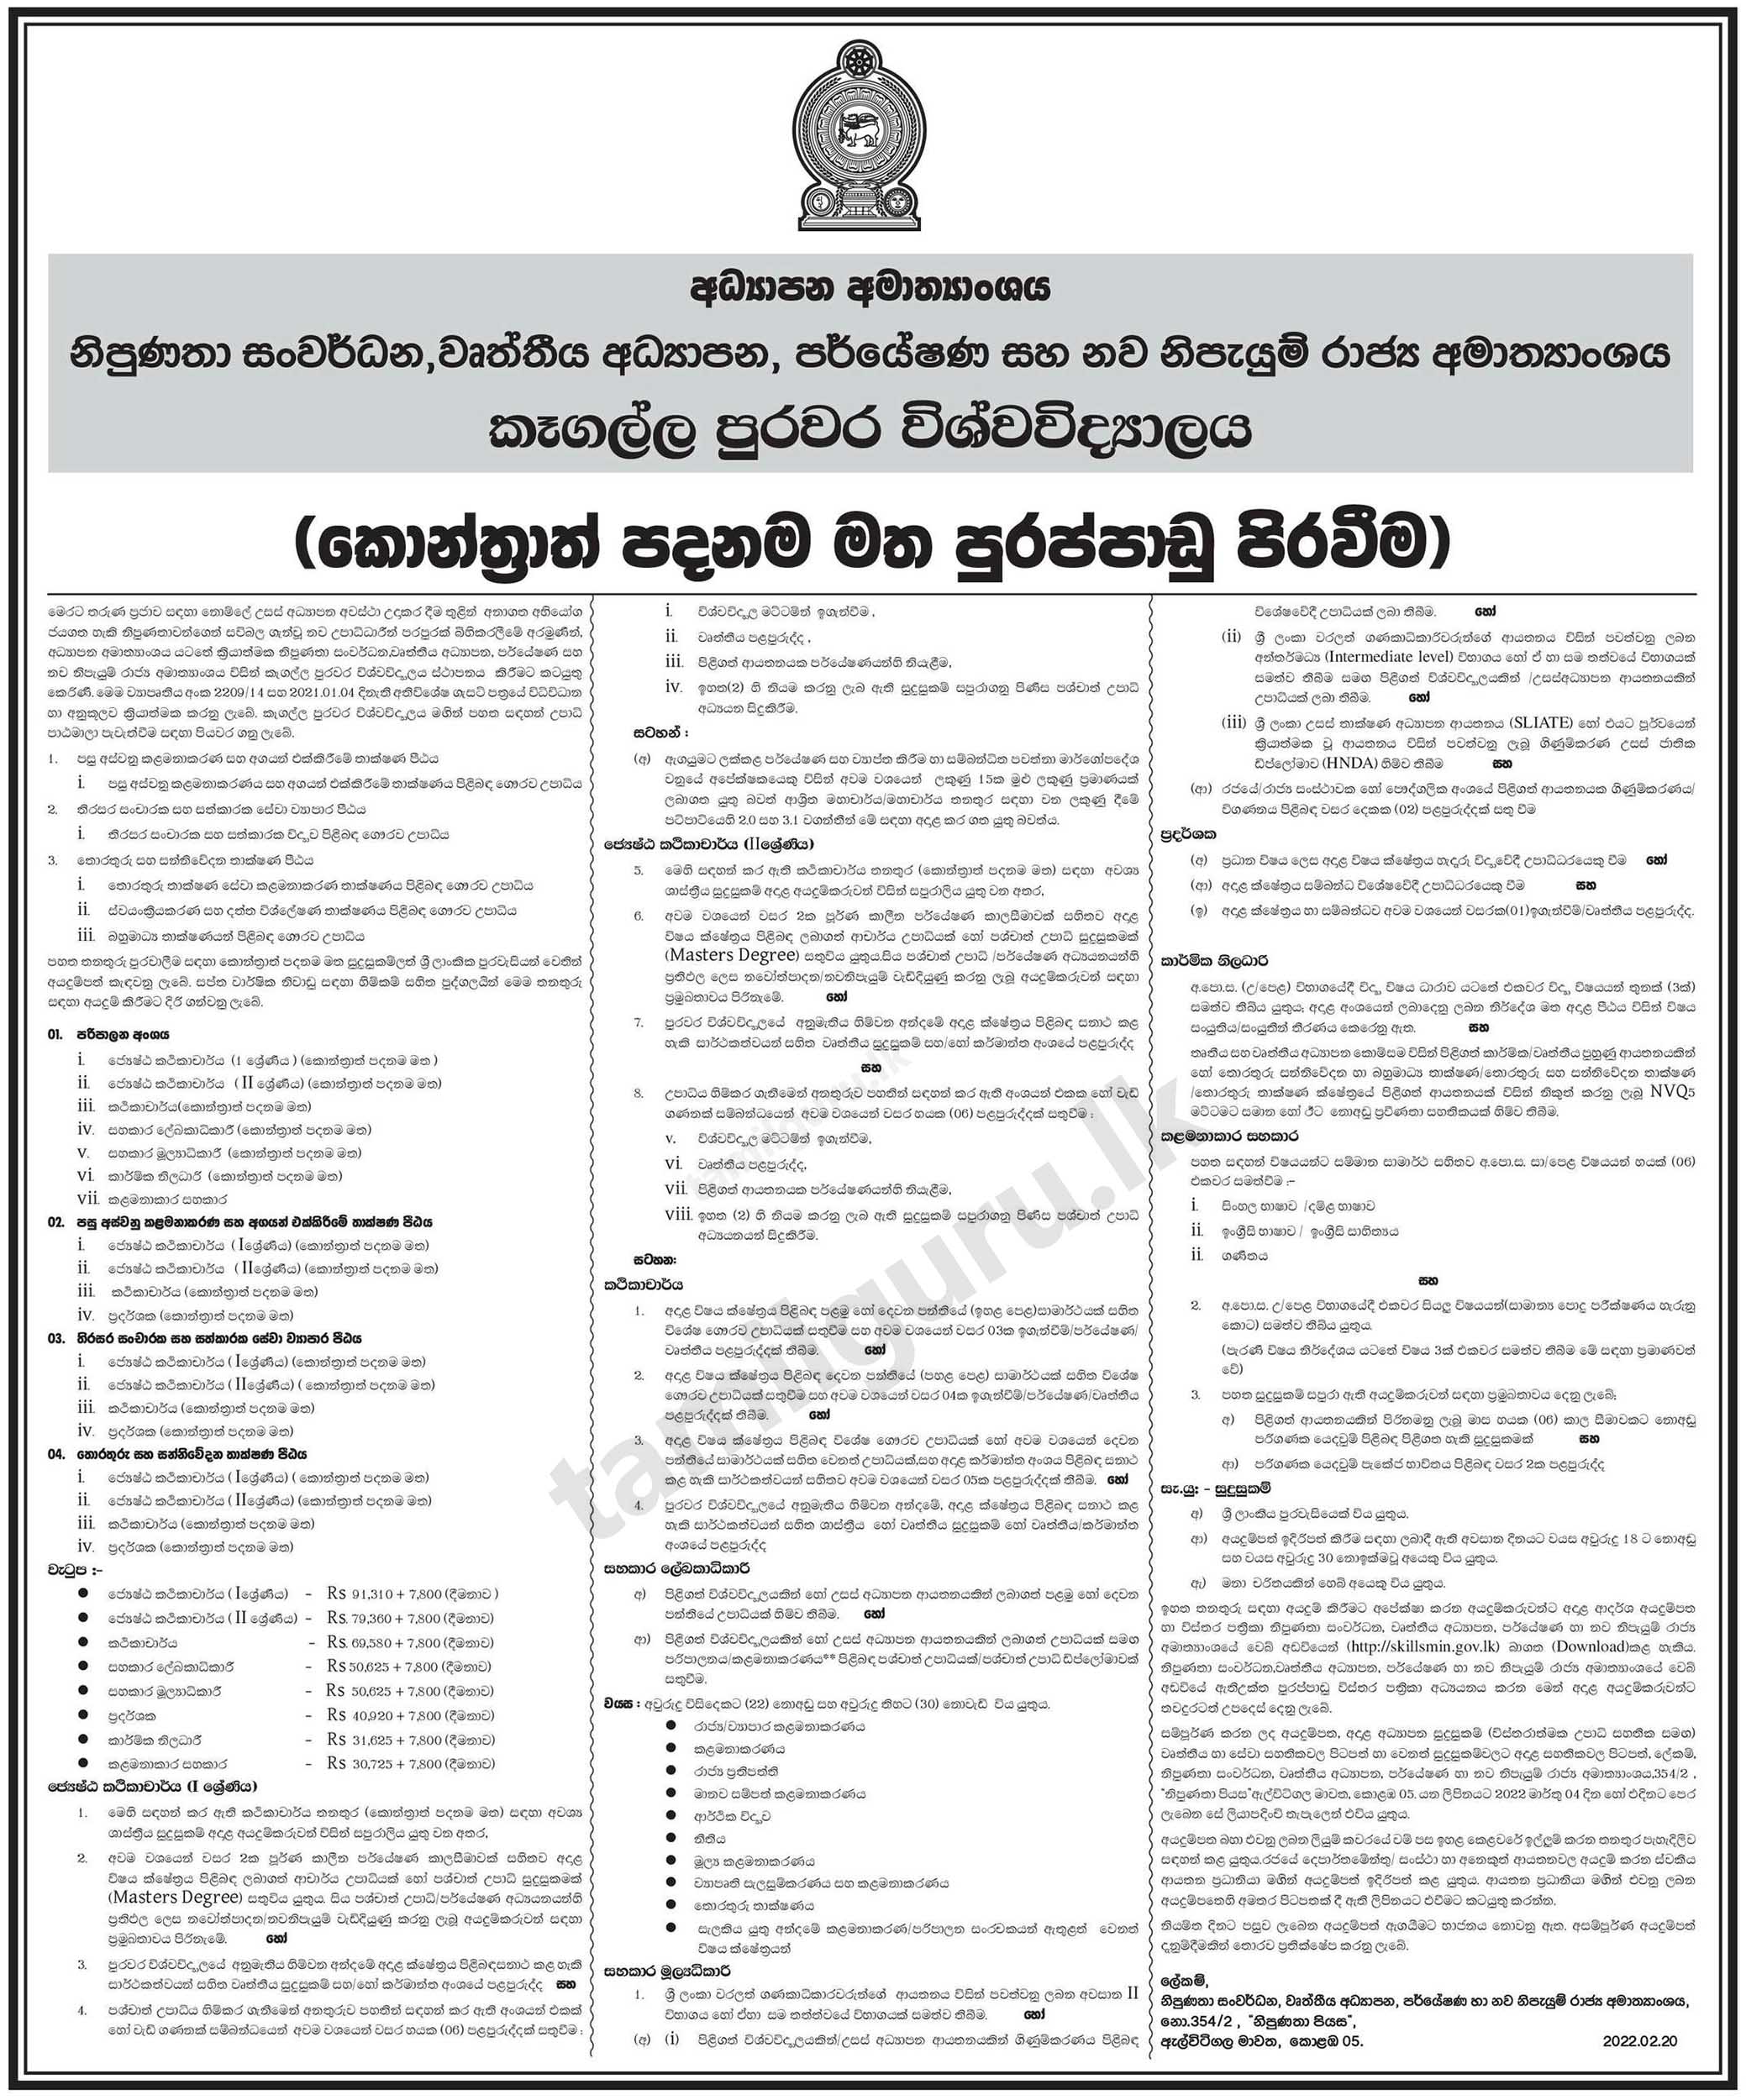 City University of Kegalle Vacancies 2022 - Management Assistant, Technical Officer, Demonstrator, Assistant Registrar & Bursar, Lecturer - Notice in Sinhala